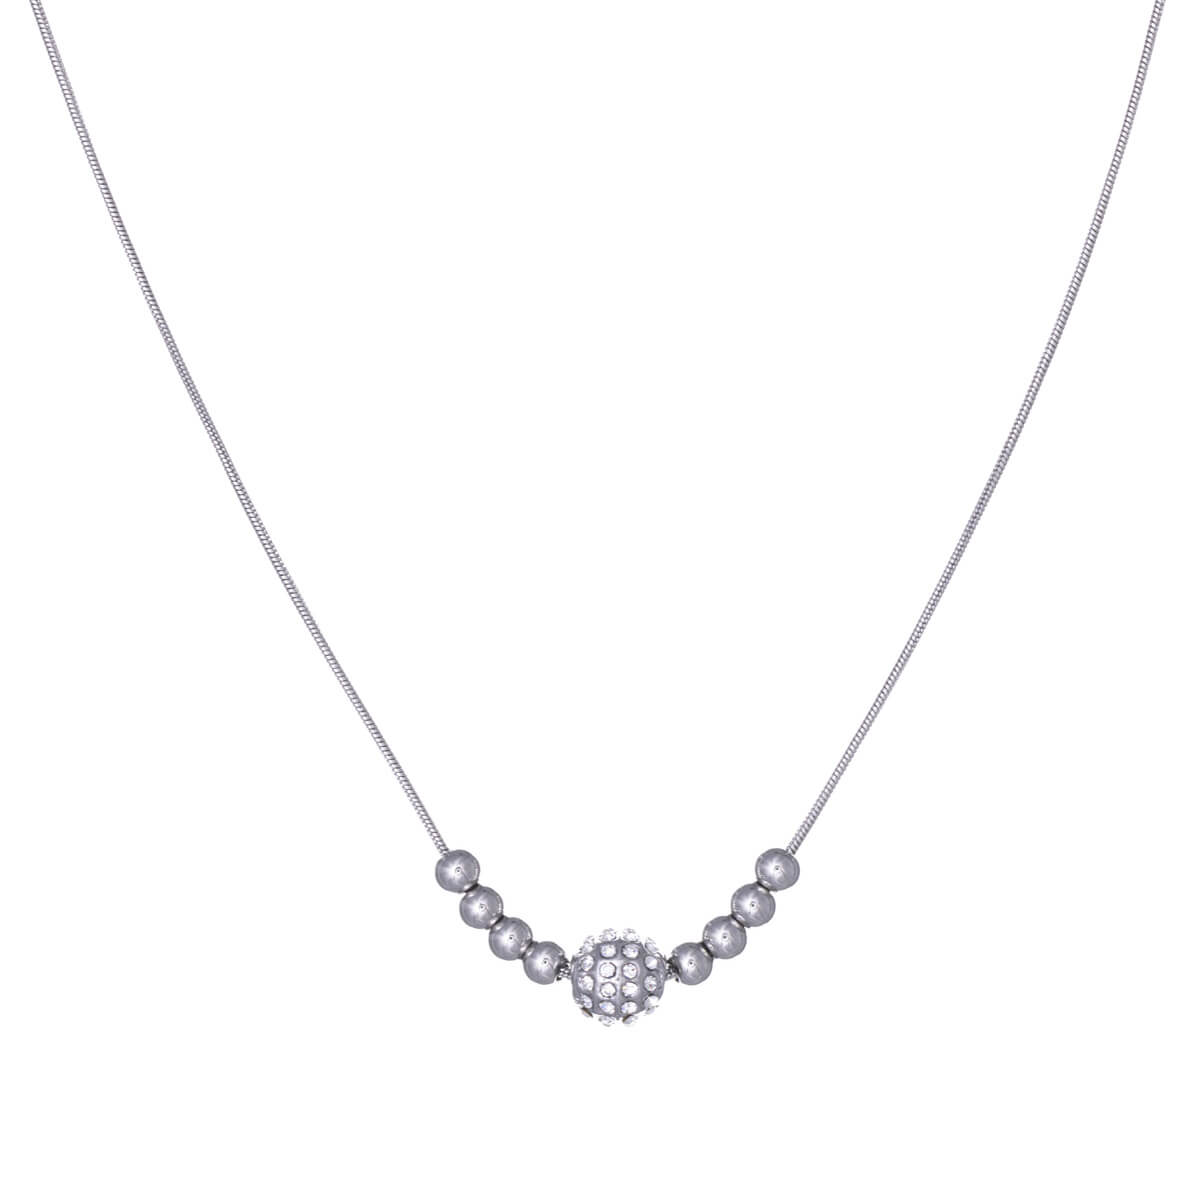 Steel beads necklace 40cm +4cm (Steel 316L)